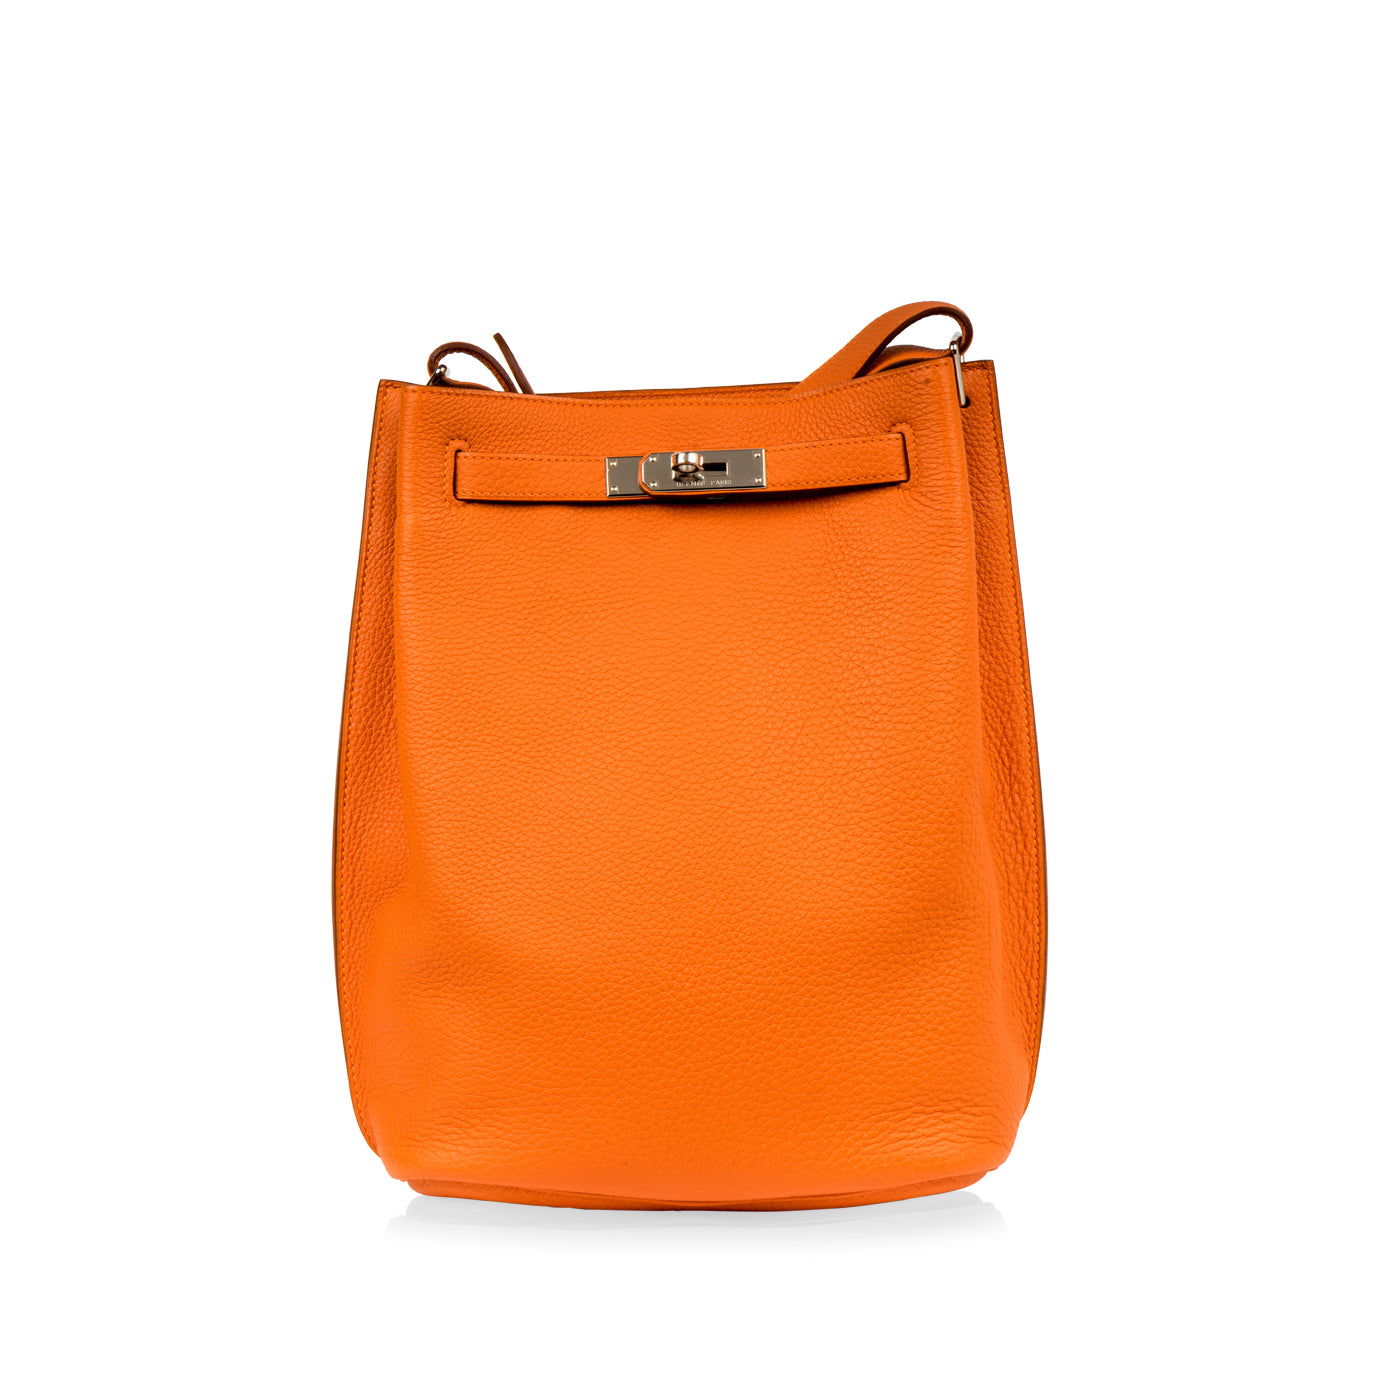 HERMES Togo So Kelly Leather Bag in Orange